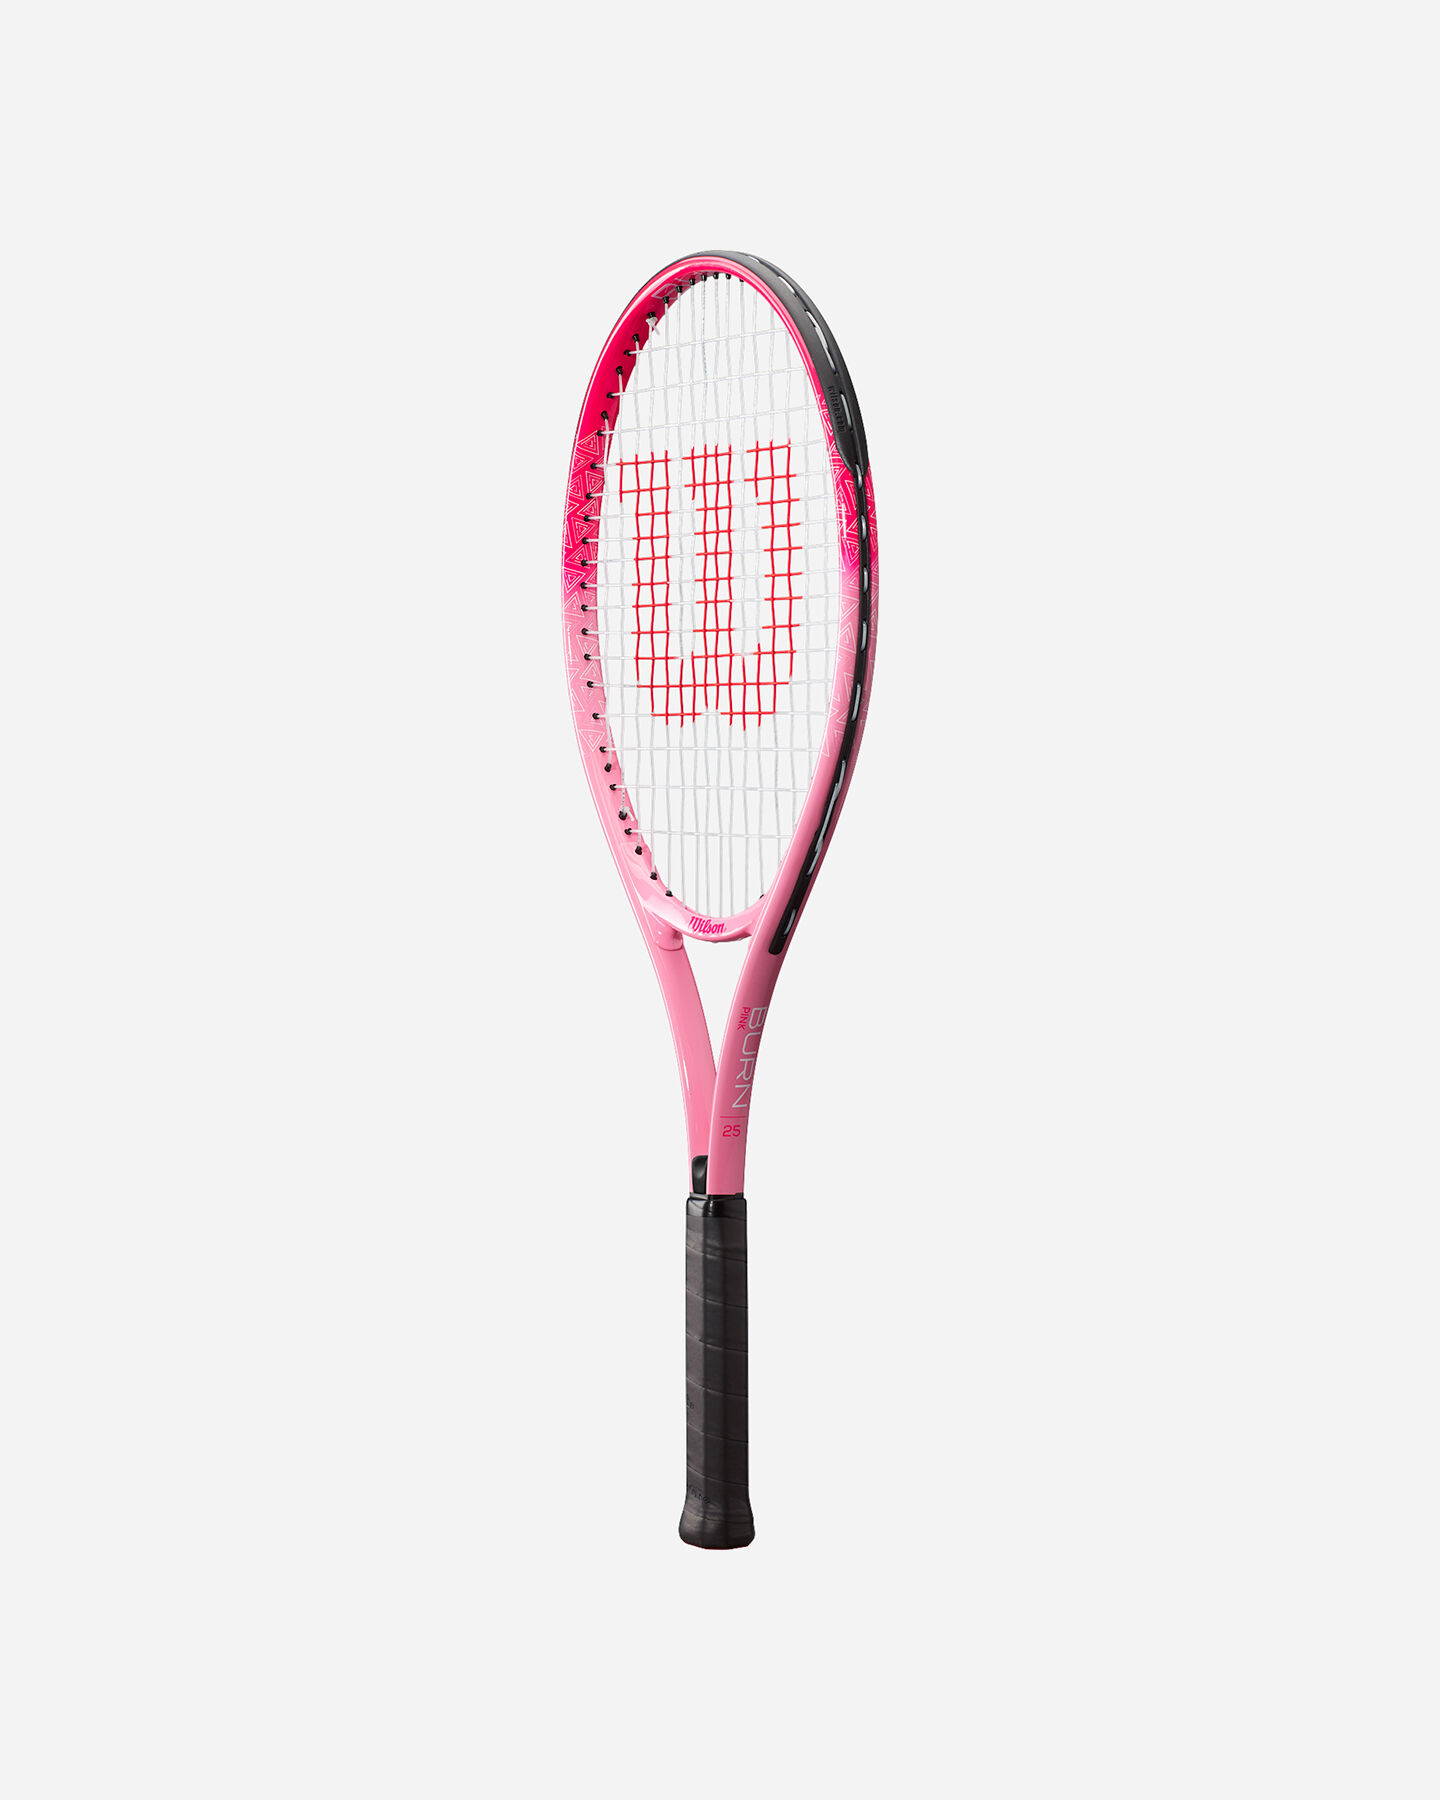  Racchetta tennis WILSON BURN PINK 25 JR S5344158|UNI|25 scatto 2